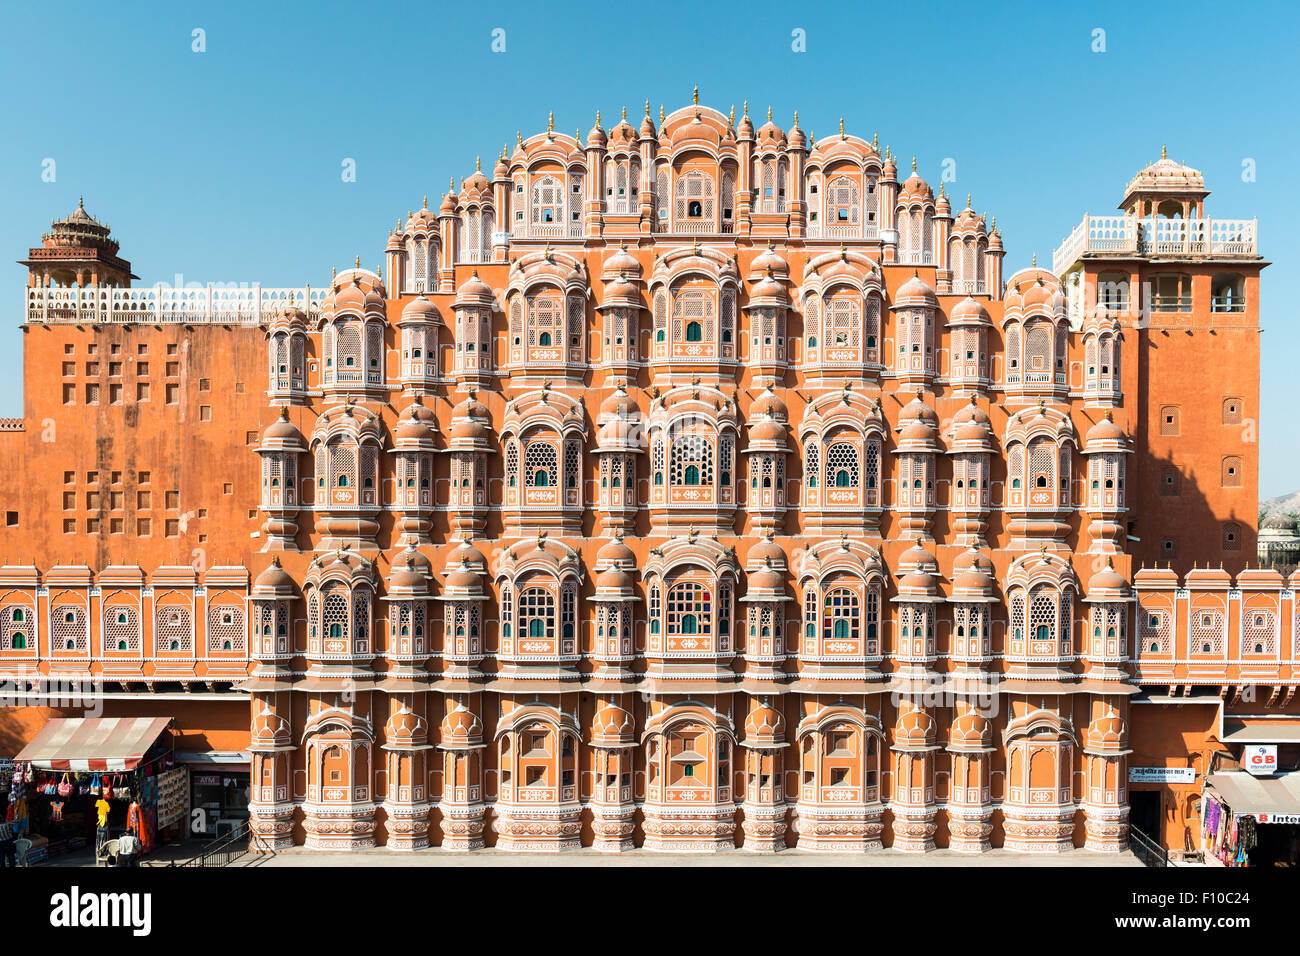 Facade of Hawa Mahal, or Palace of the Winds, Jaipur, India Stock Photo